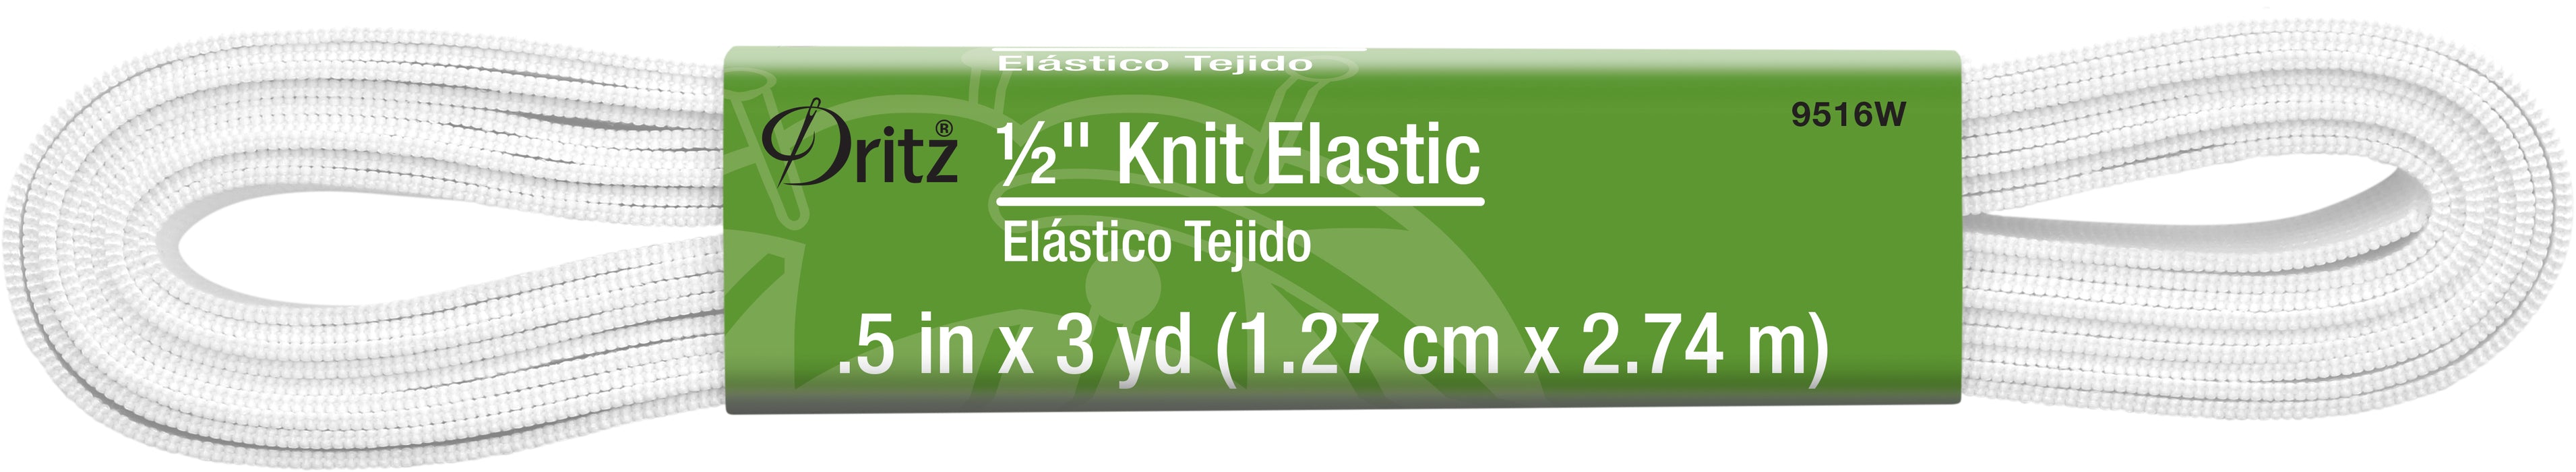 1/2" Knit Elastic, White, 3 yd